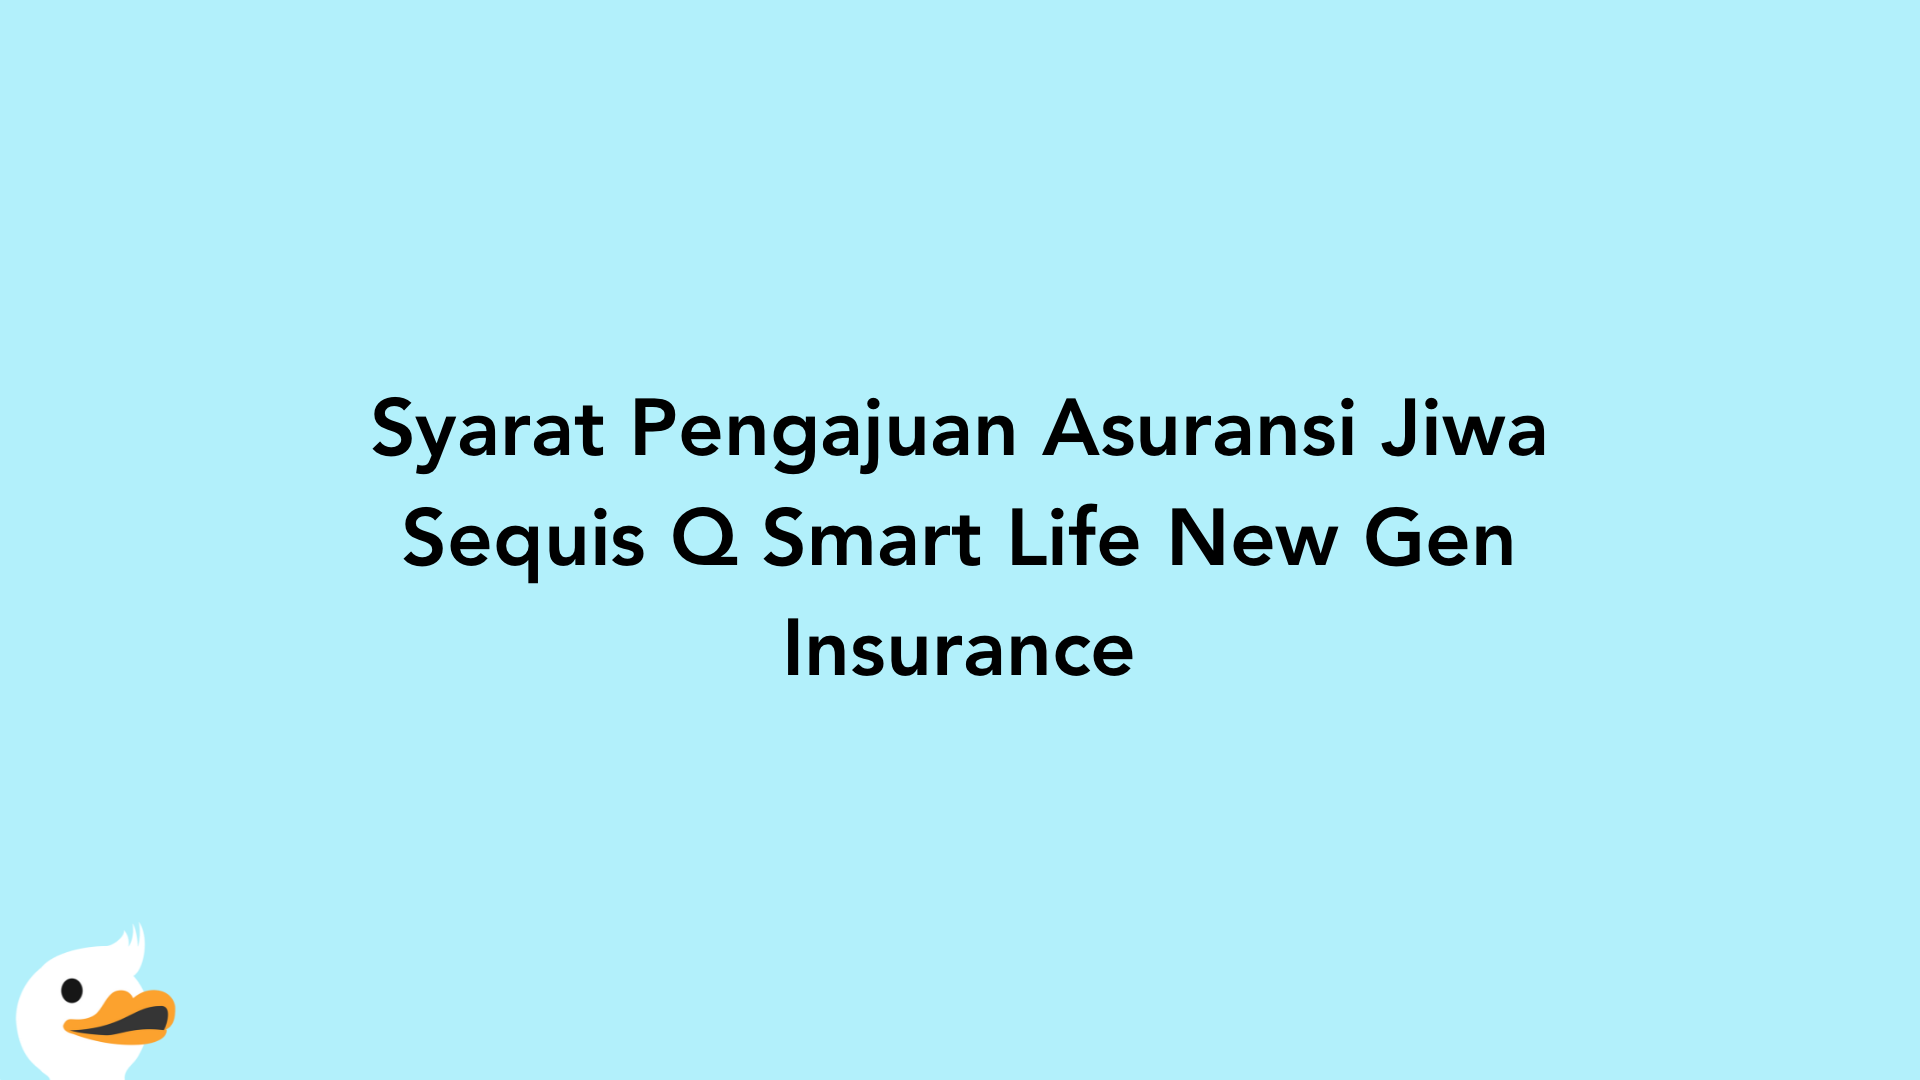 Syarat Pengajuan Asuransi Jiwa Sequis Q Smart Life New Gen Insurance